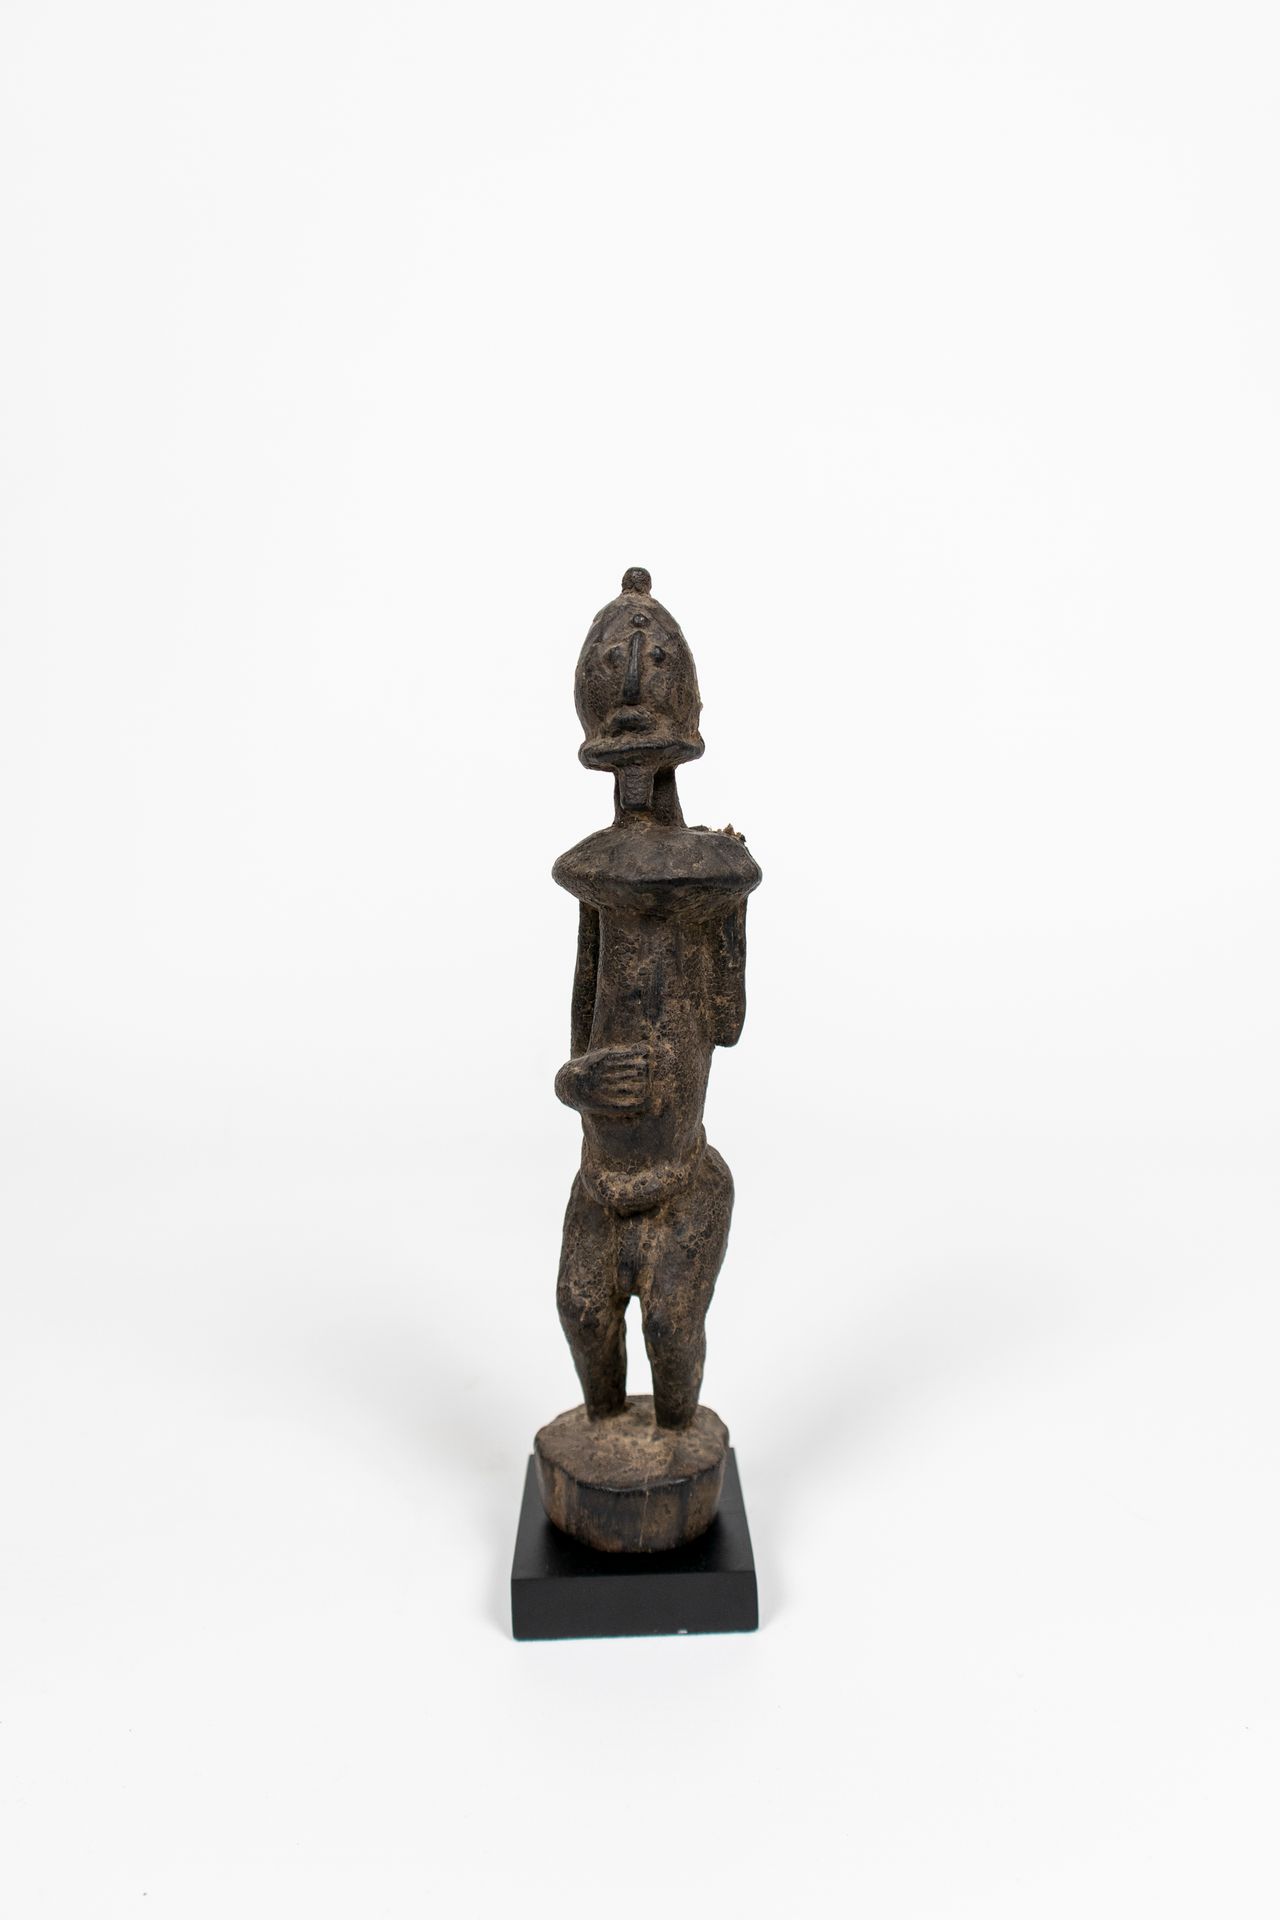 Null Dogon statuette, Mali. Wood, crusty patina H.23cm